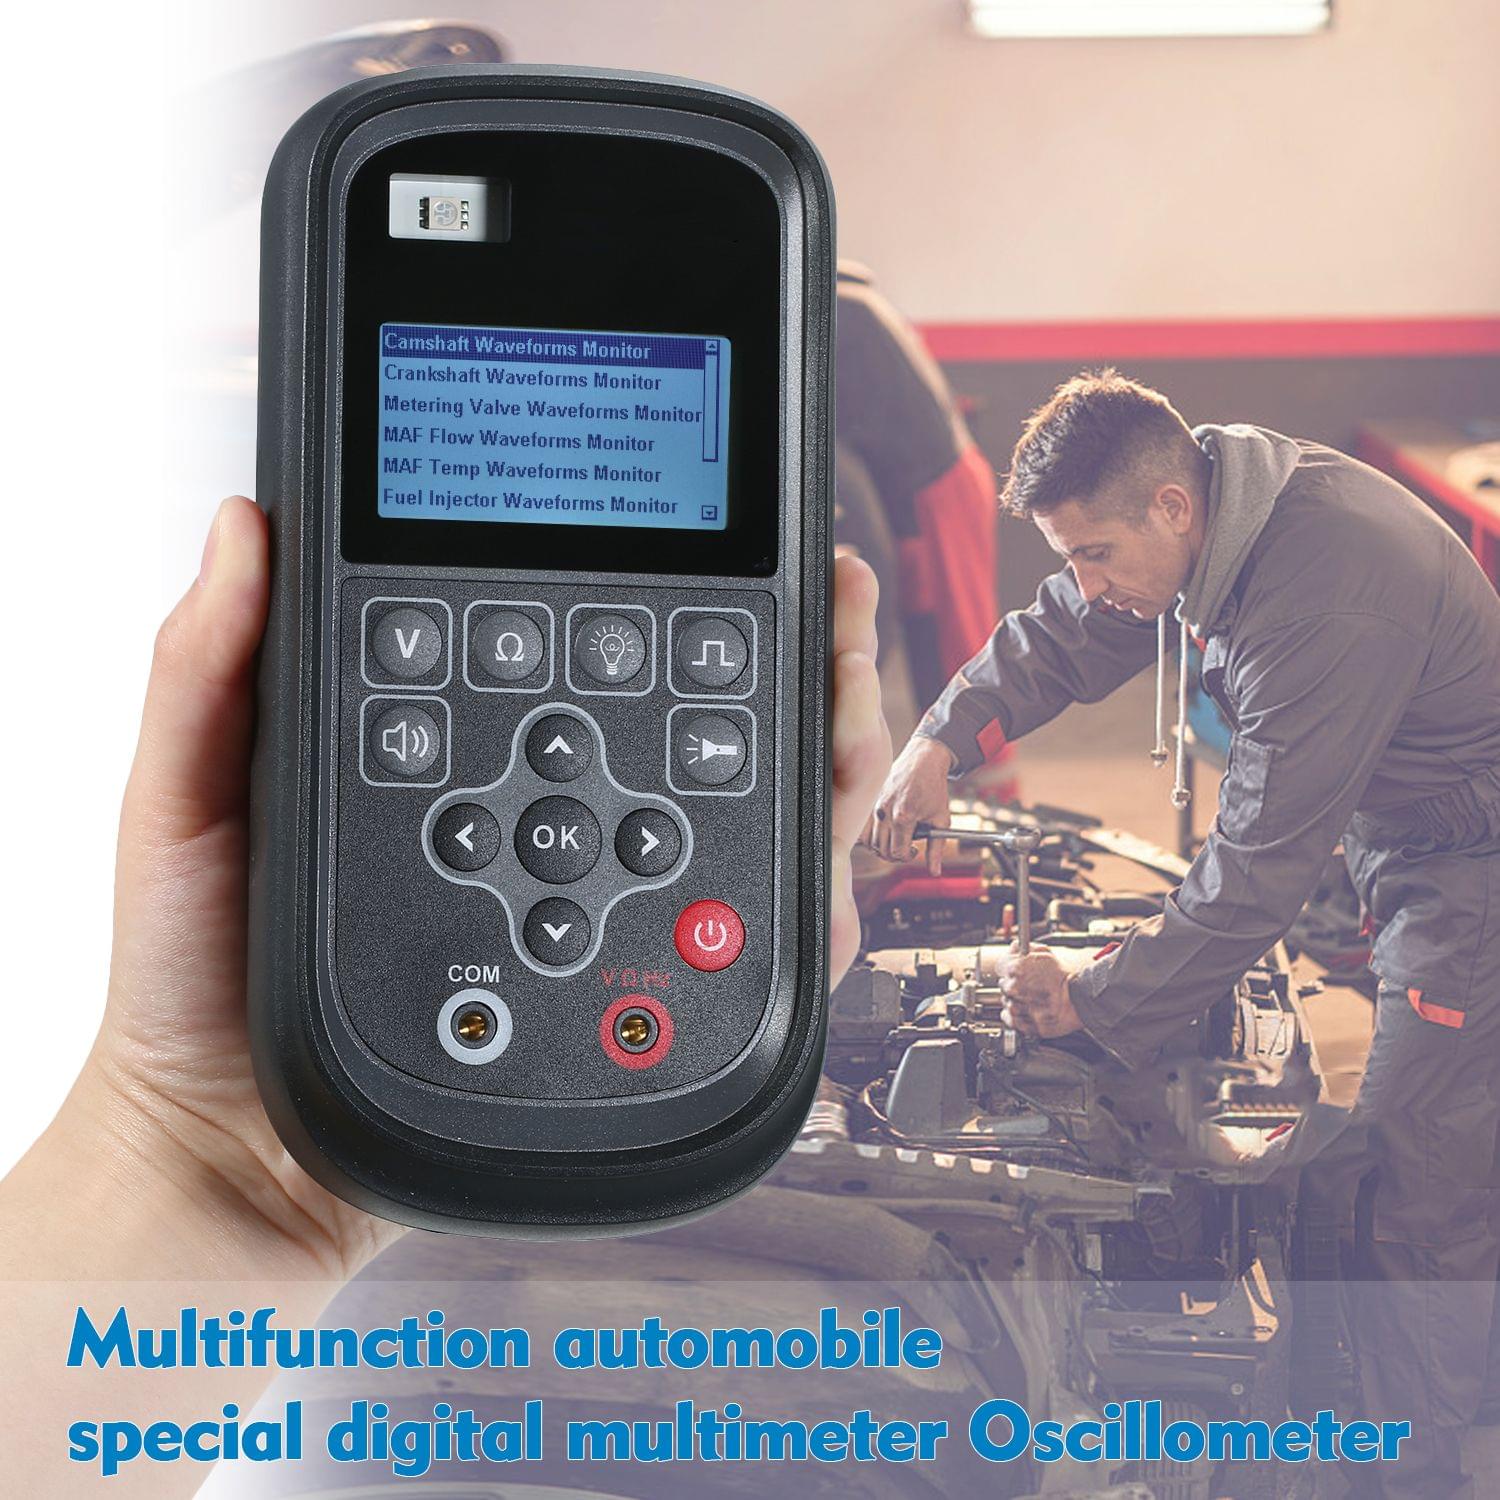 Multifunction automobile special digital multimeter